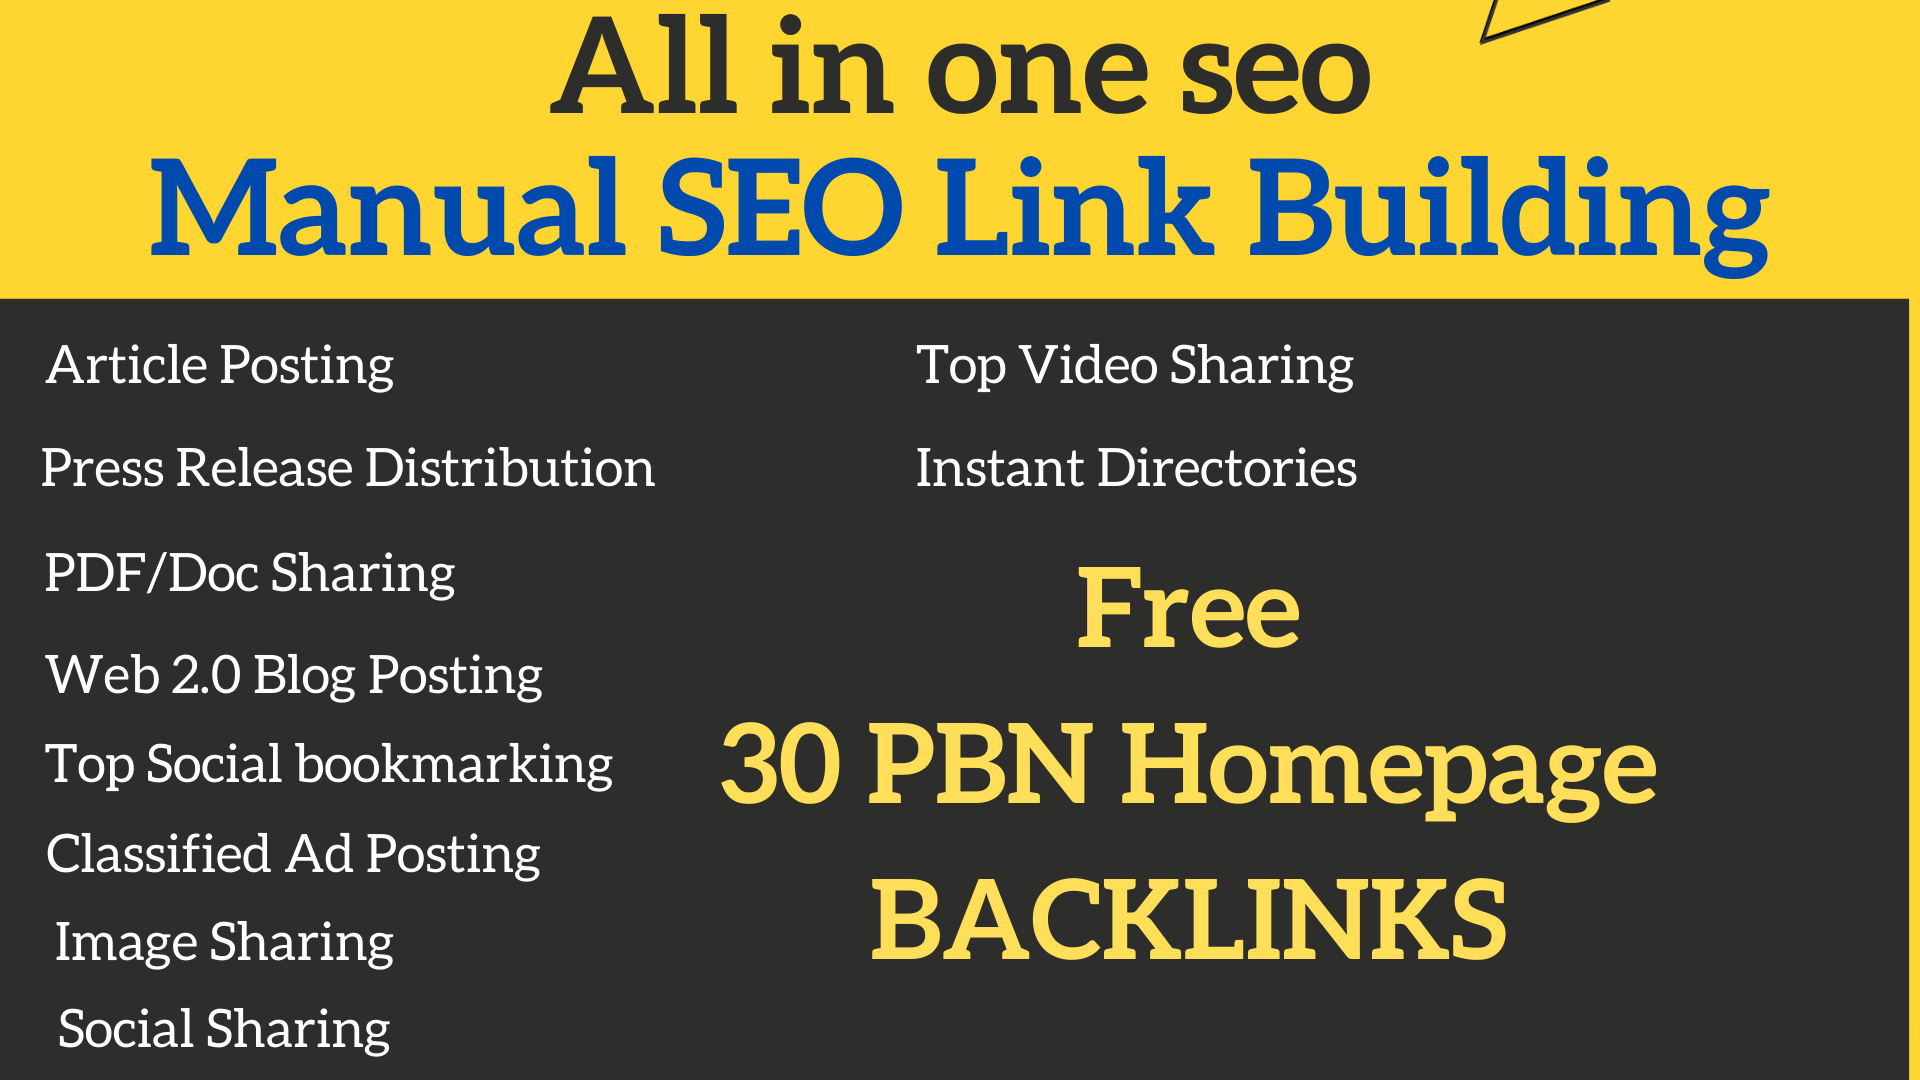 All SEO Link Building & PBN Homepage Backlinks Google rank